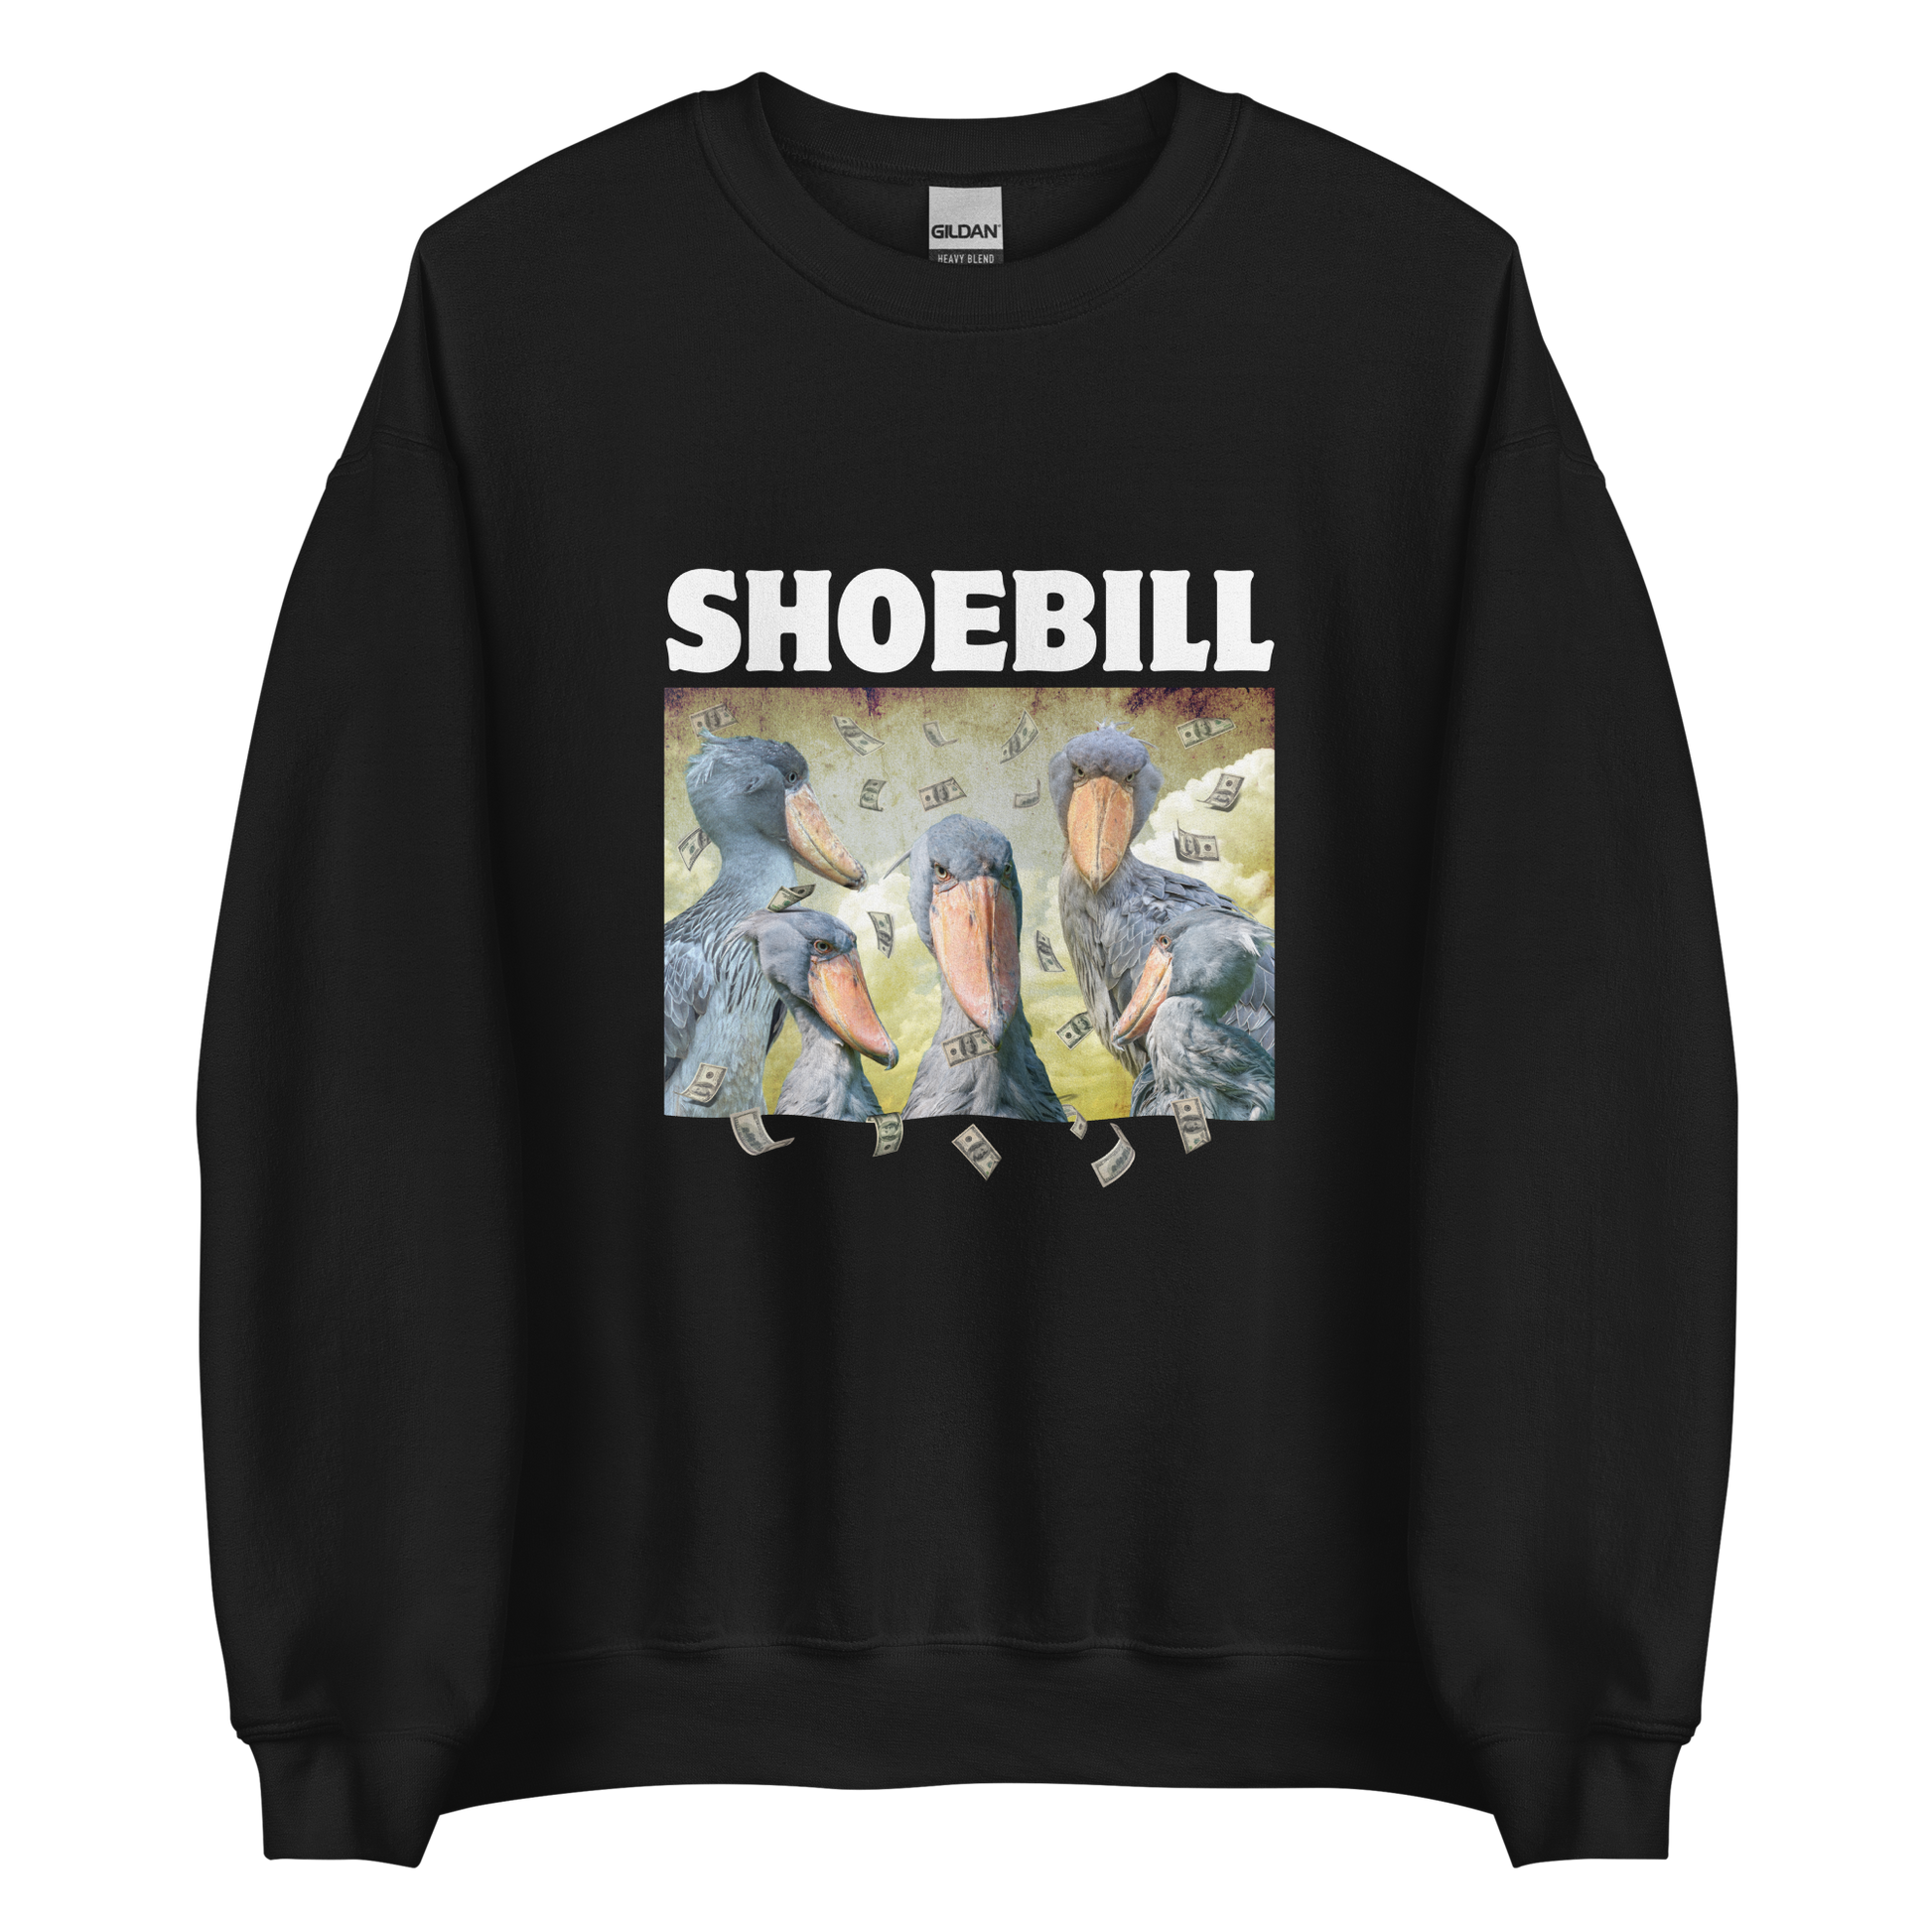 Black Shoebill Sweatshirt featuring a cool Shoebill graphic on the chest - Artsy/Funny Graphic Shoebill Stork Sweatshirts - Boozy Fox